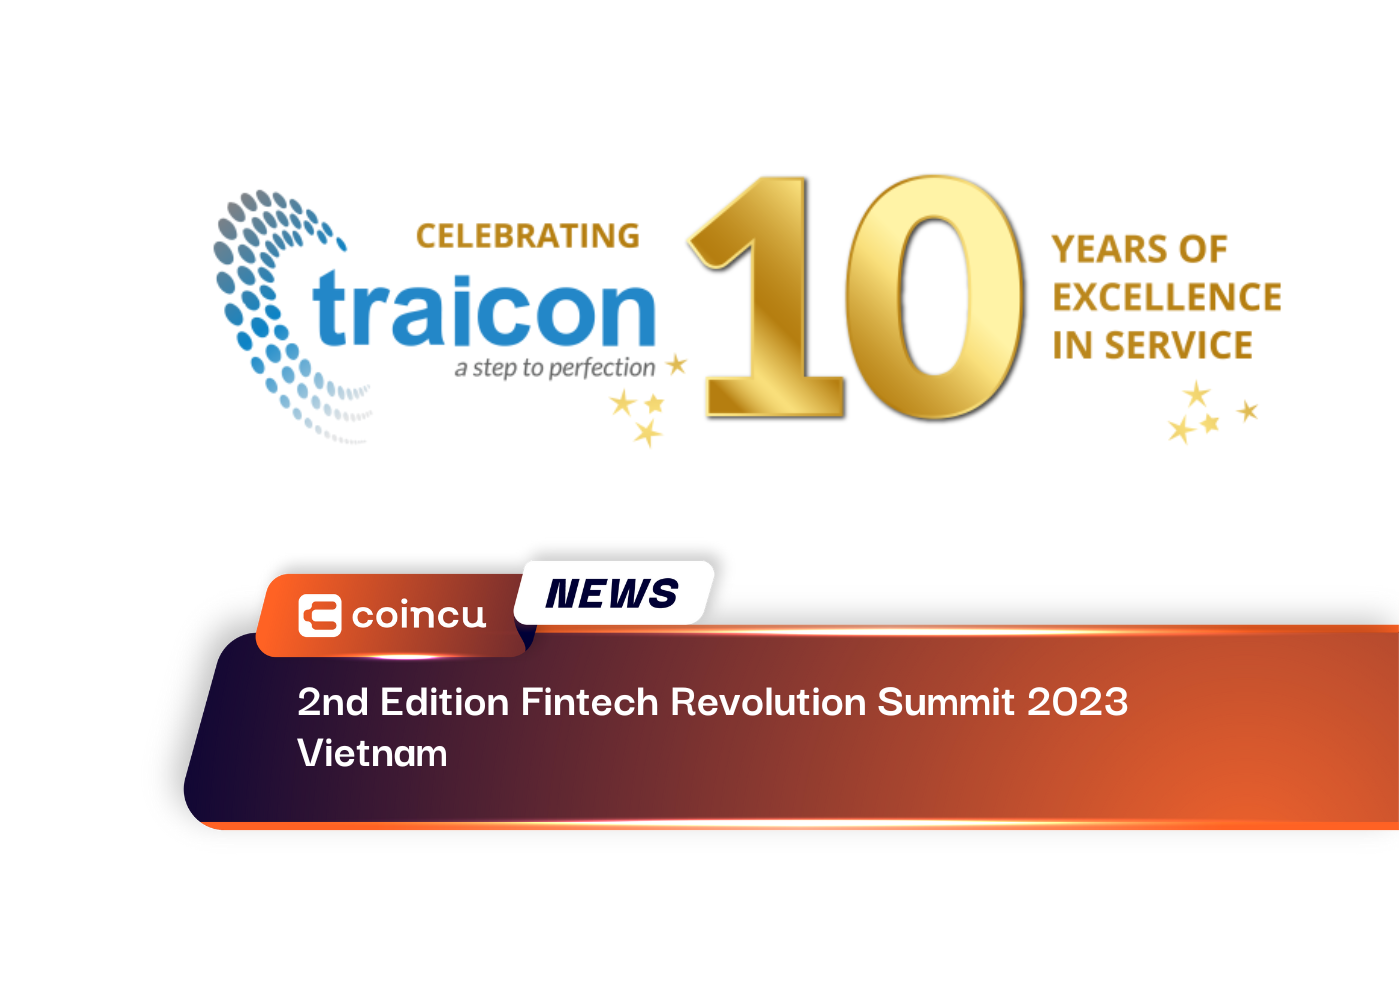 2nd Edition Fintech Revolution Summit 2023